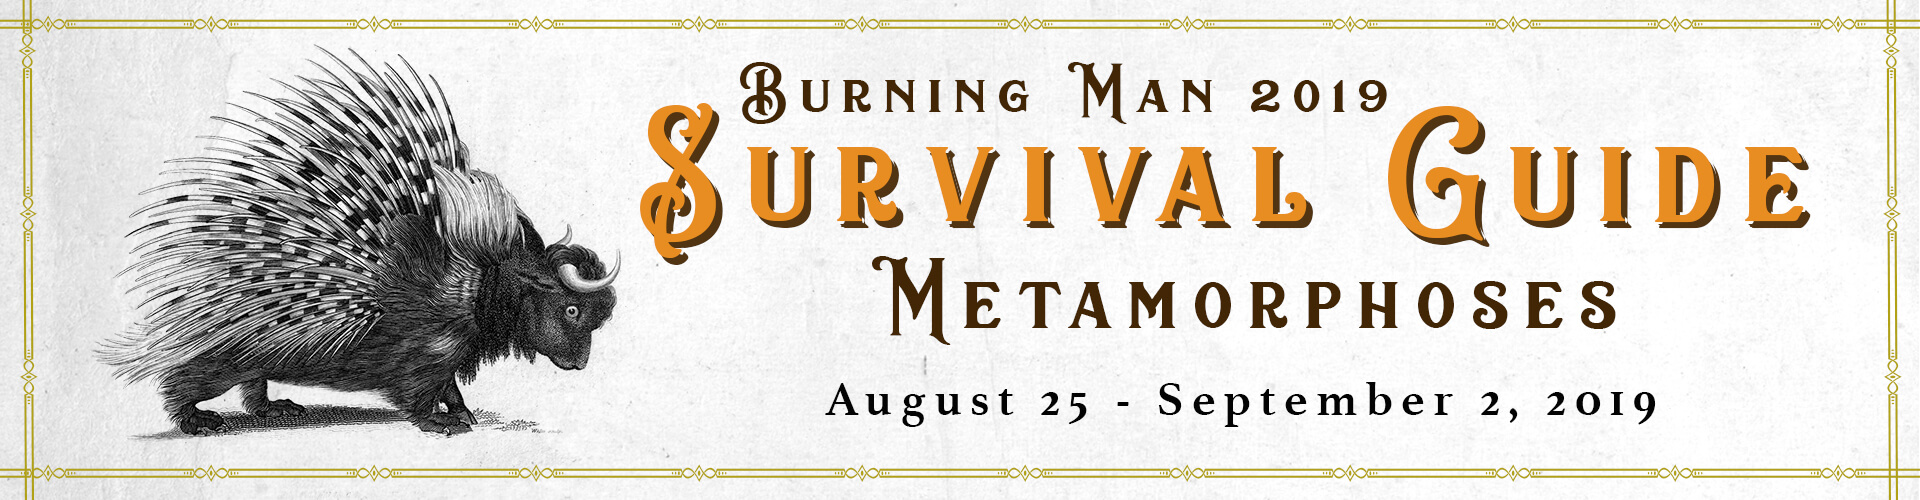 2019 Burning Man Survival Guide